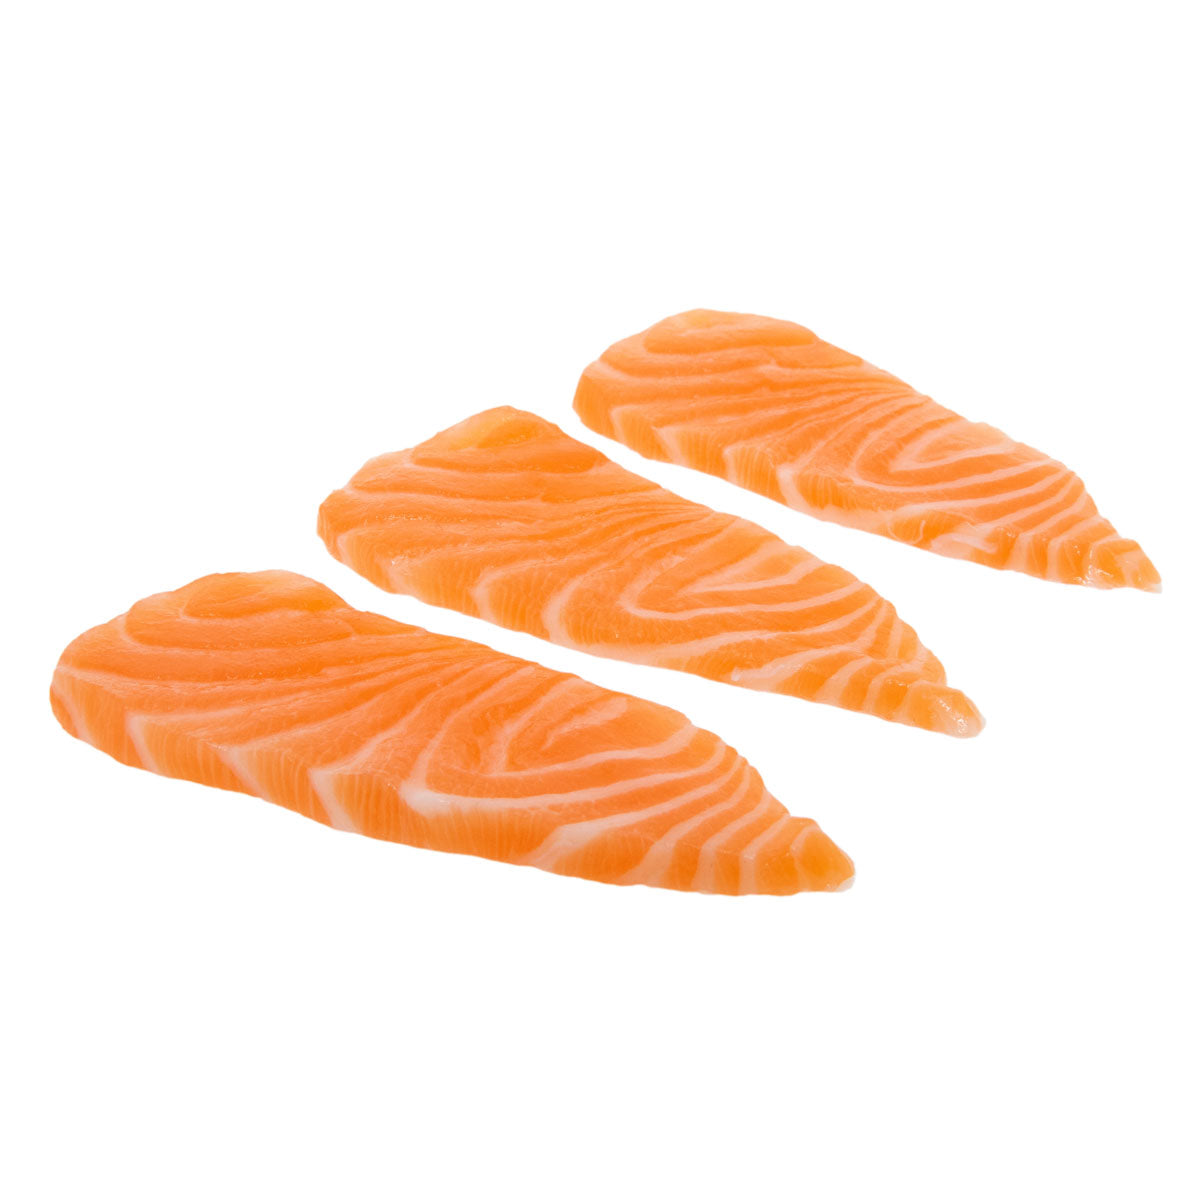 Pierless Fish Sliced Scottish Salmon